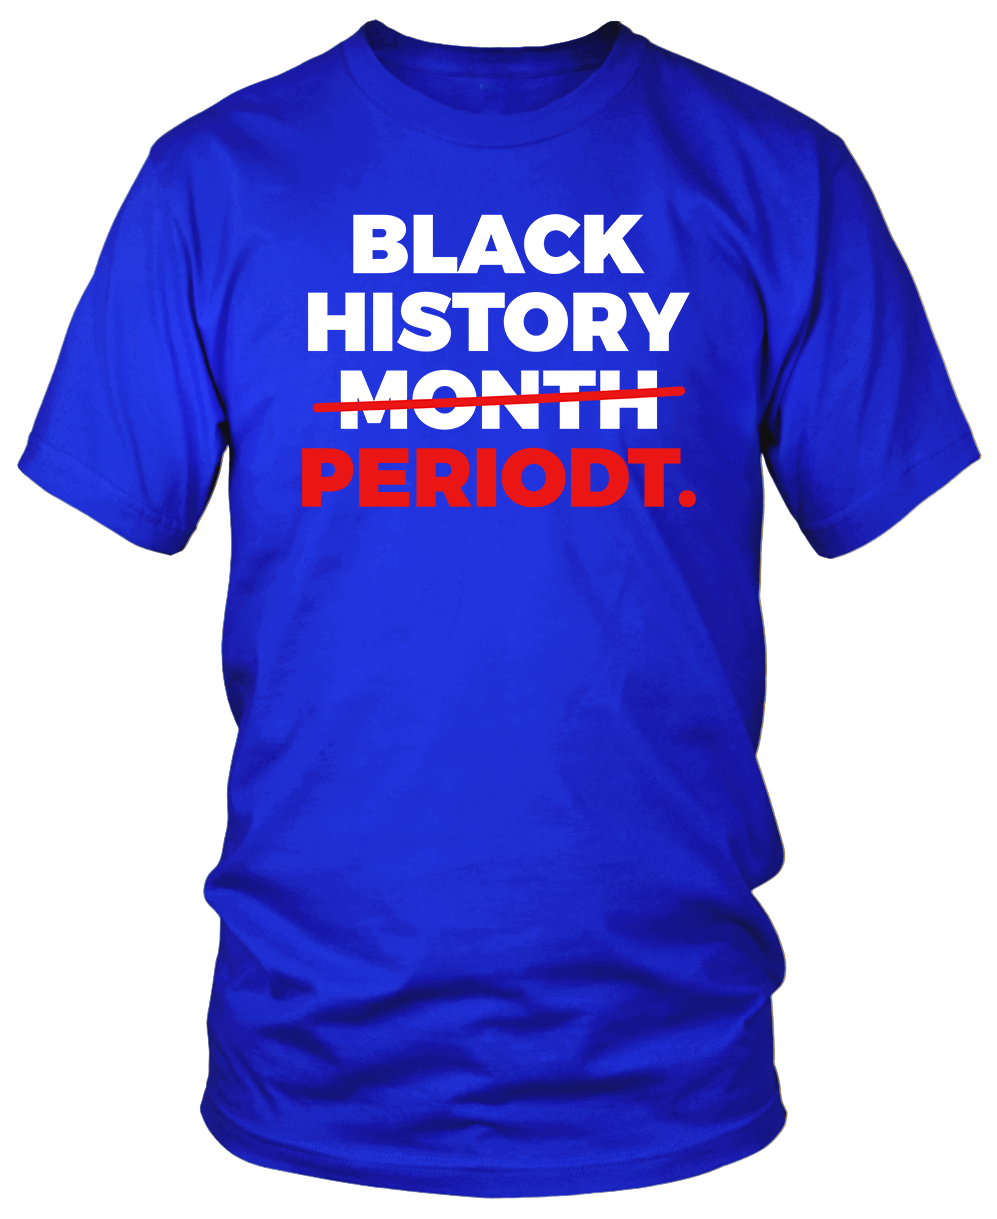 BLACK HISTORY PERIODT T-SHIRTS